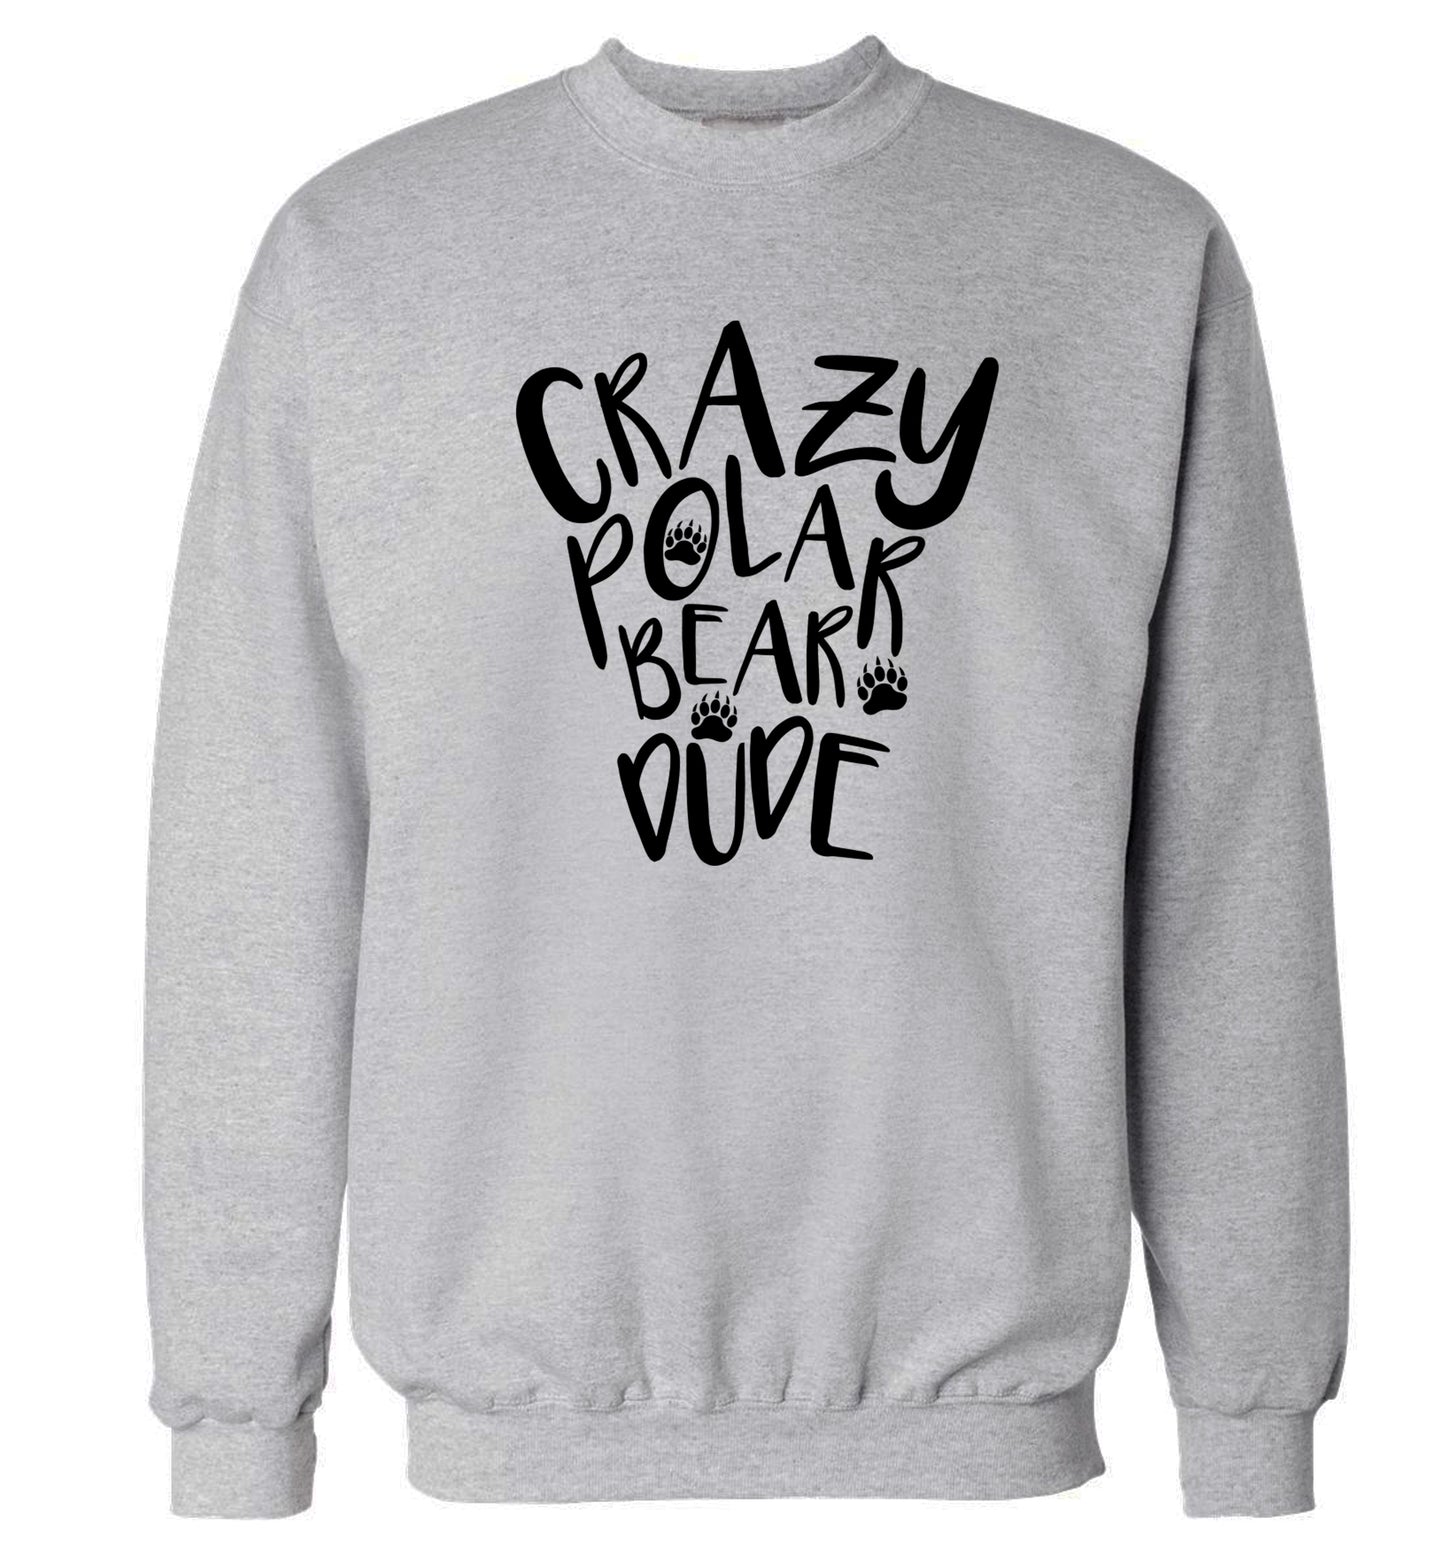 Crazy polar bear dude Adult's unisex grey Sweater 2XL